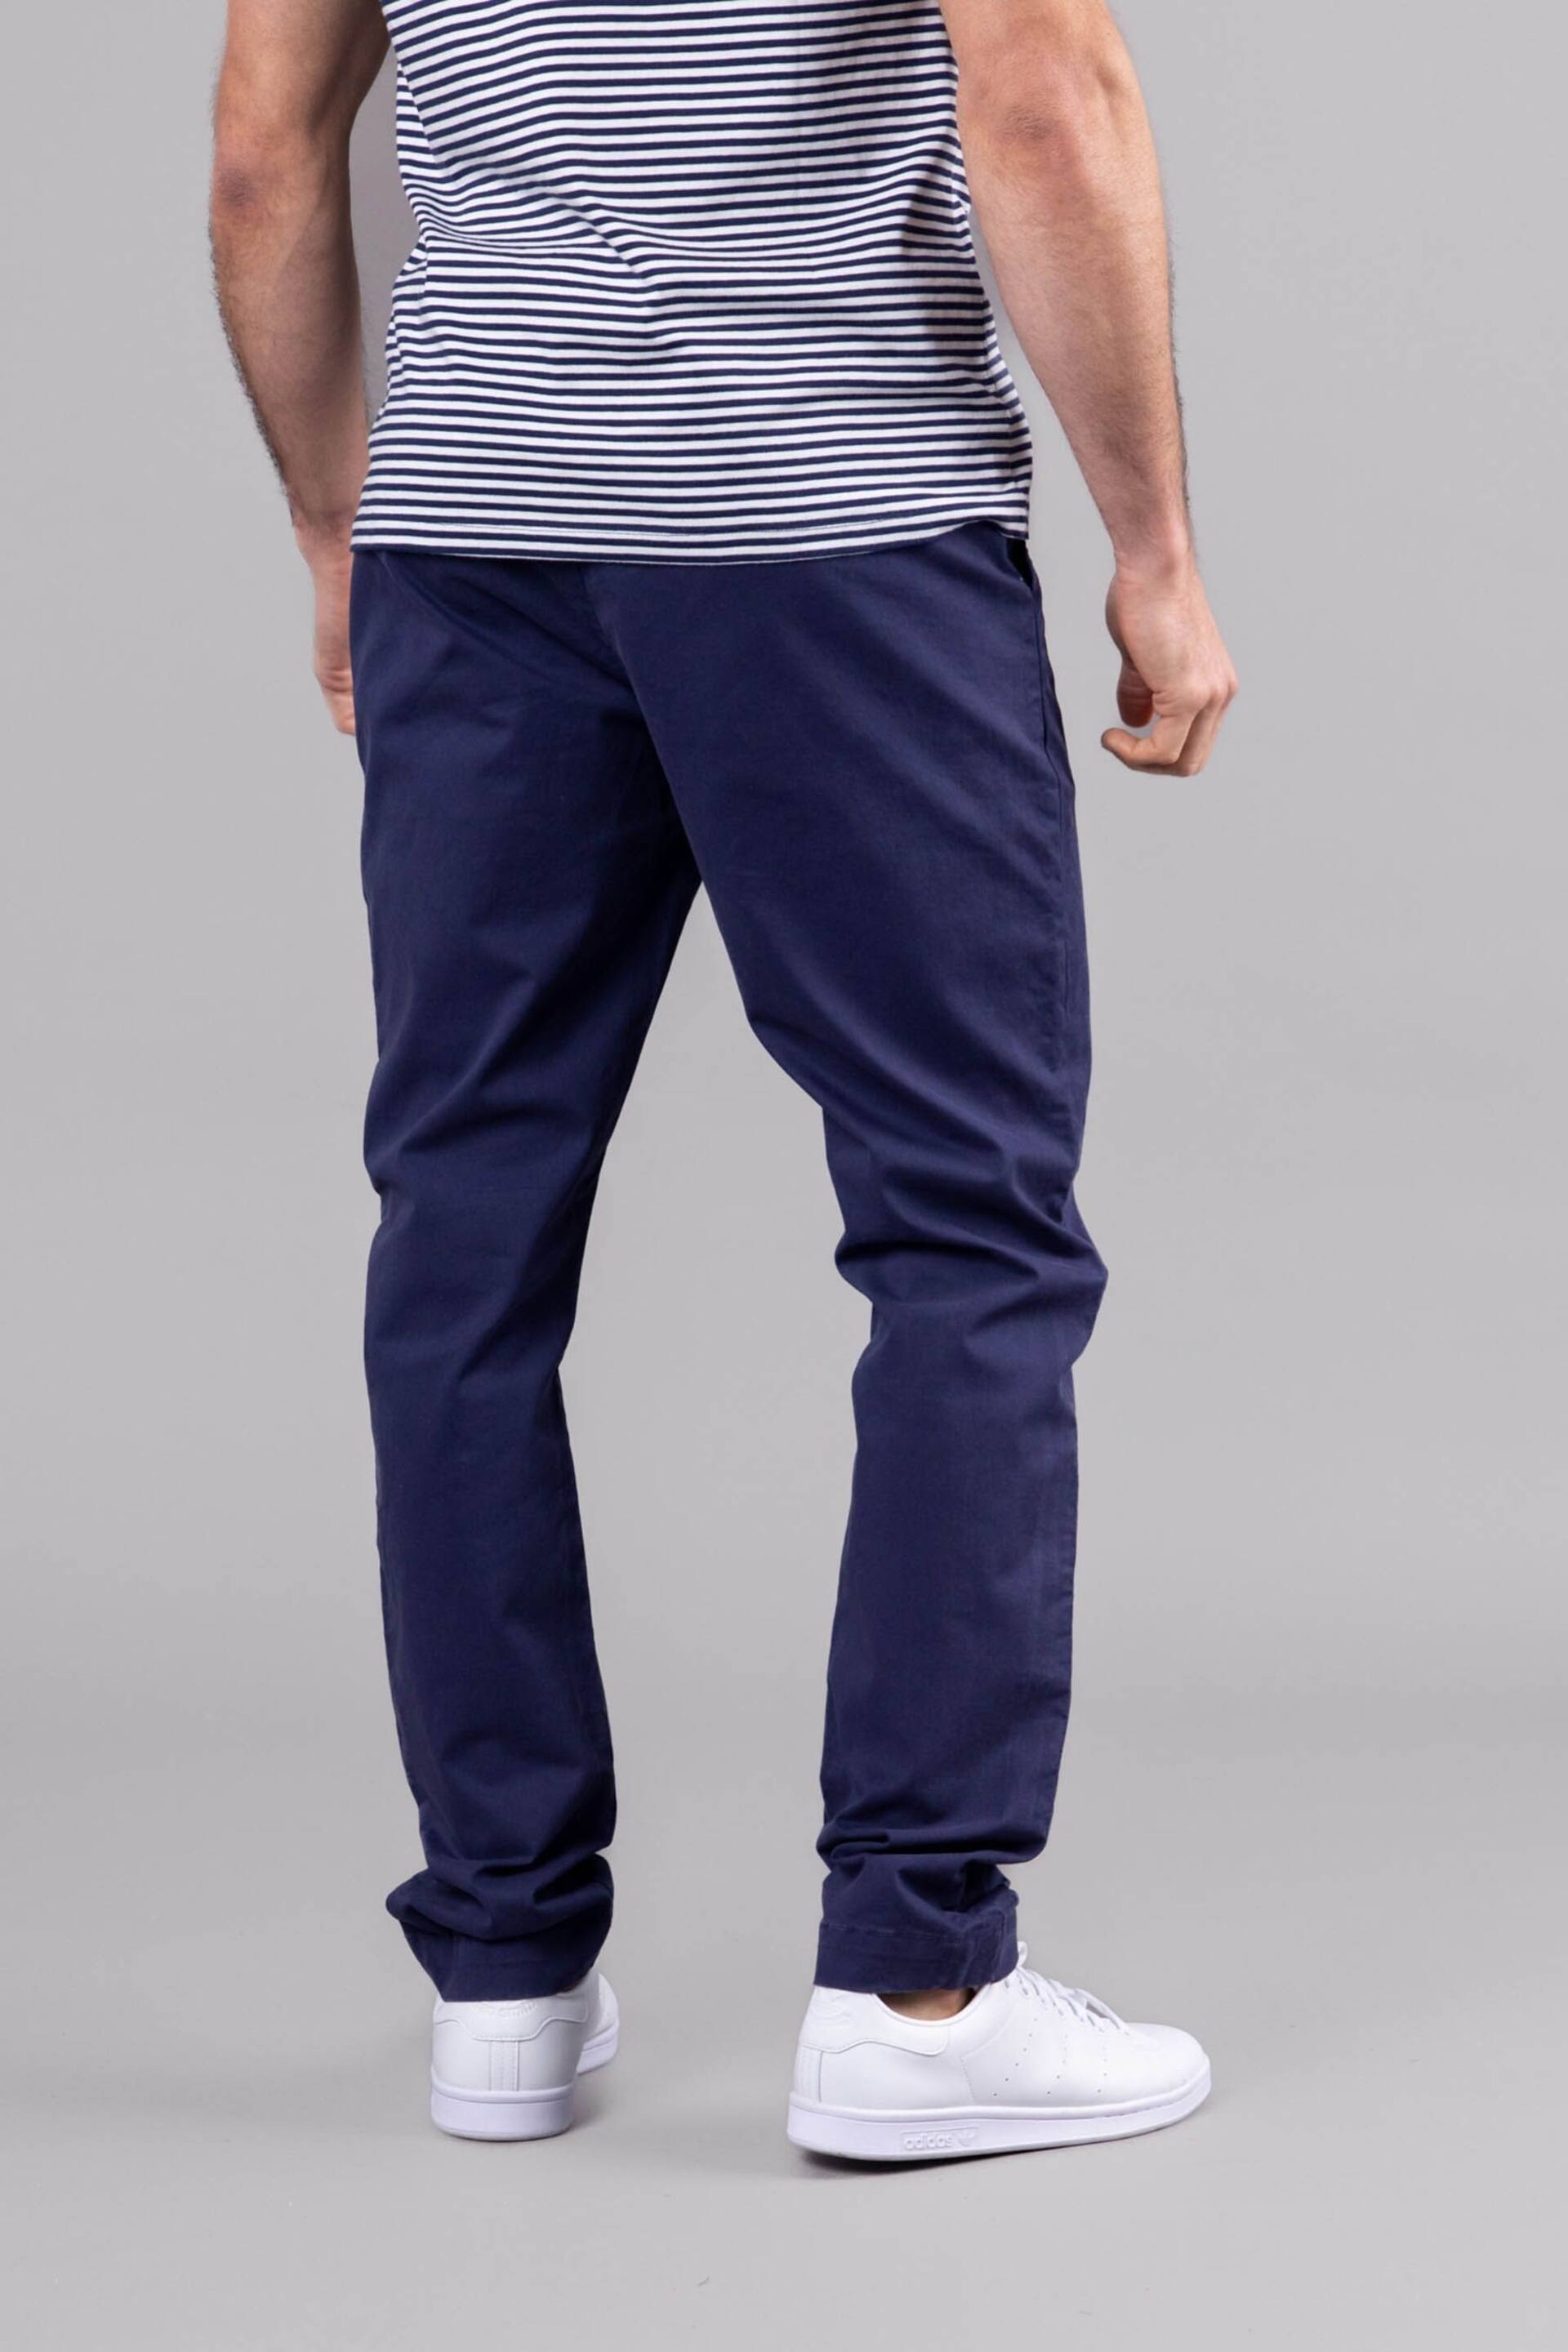 Lakeland Clothing Blue Noel Cotton Chinos Trousers - Image 3 of 5